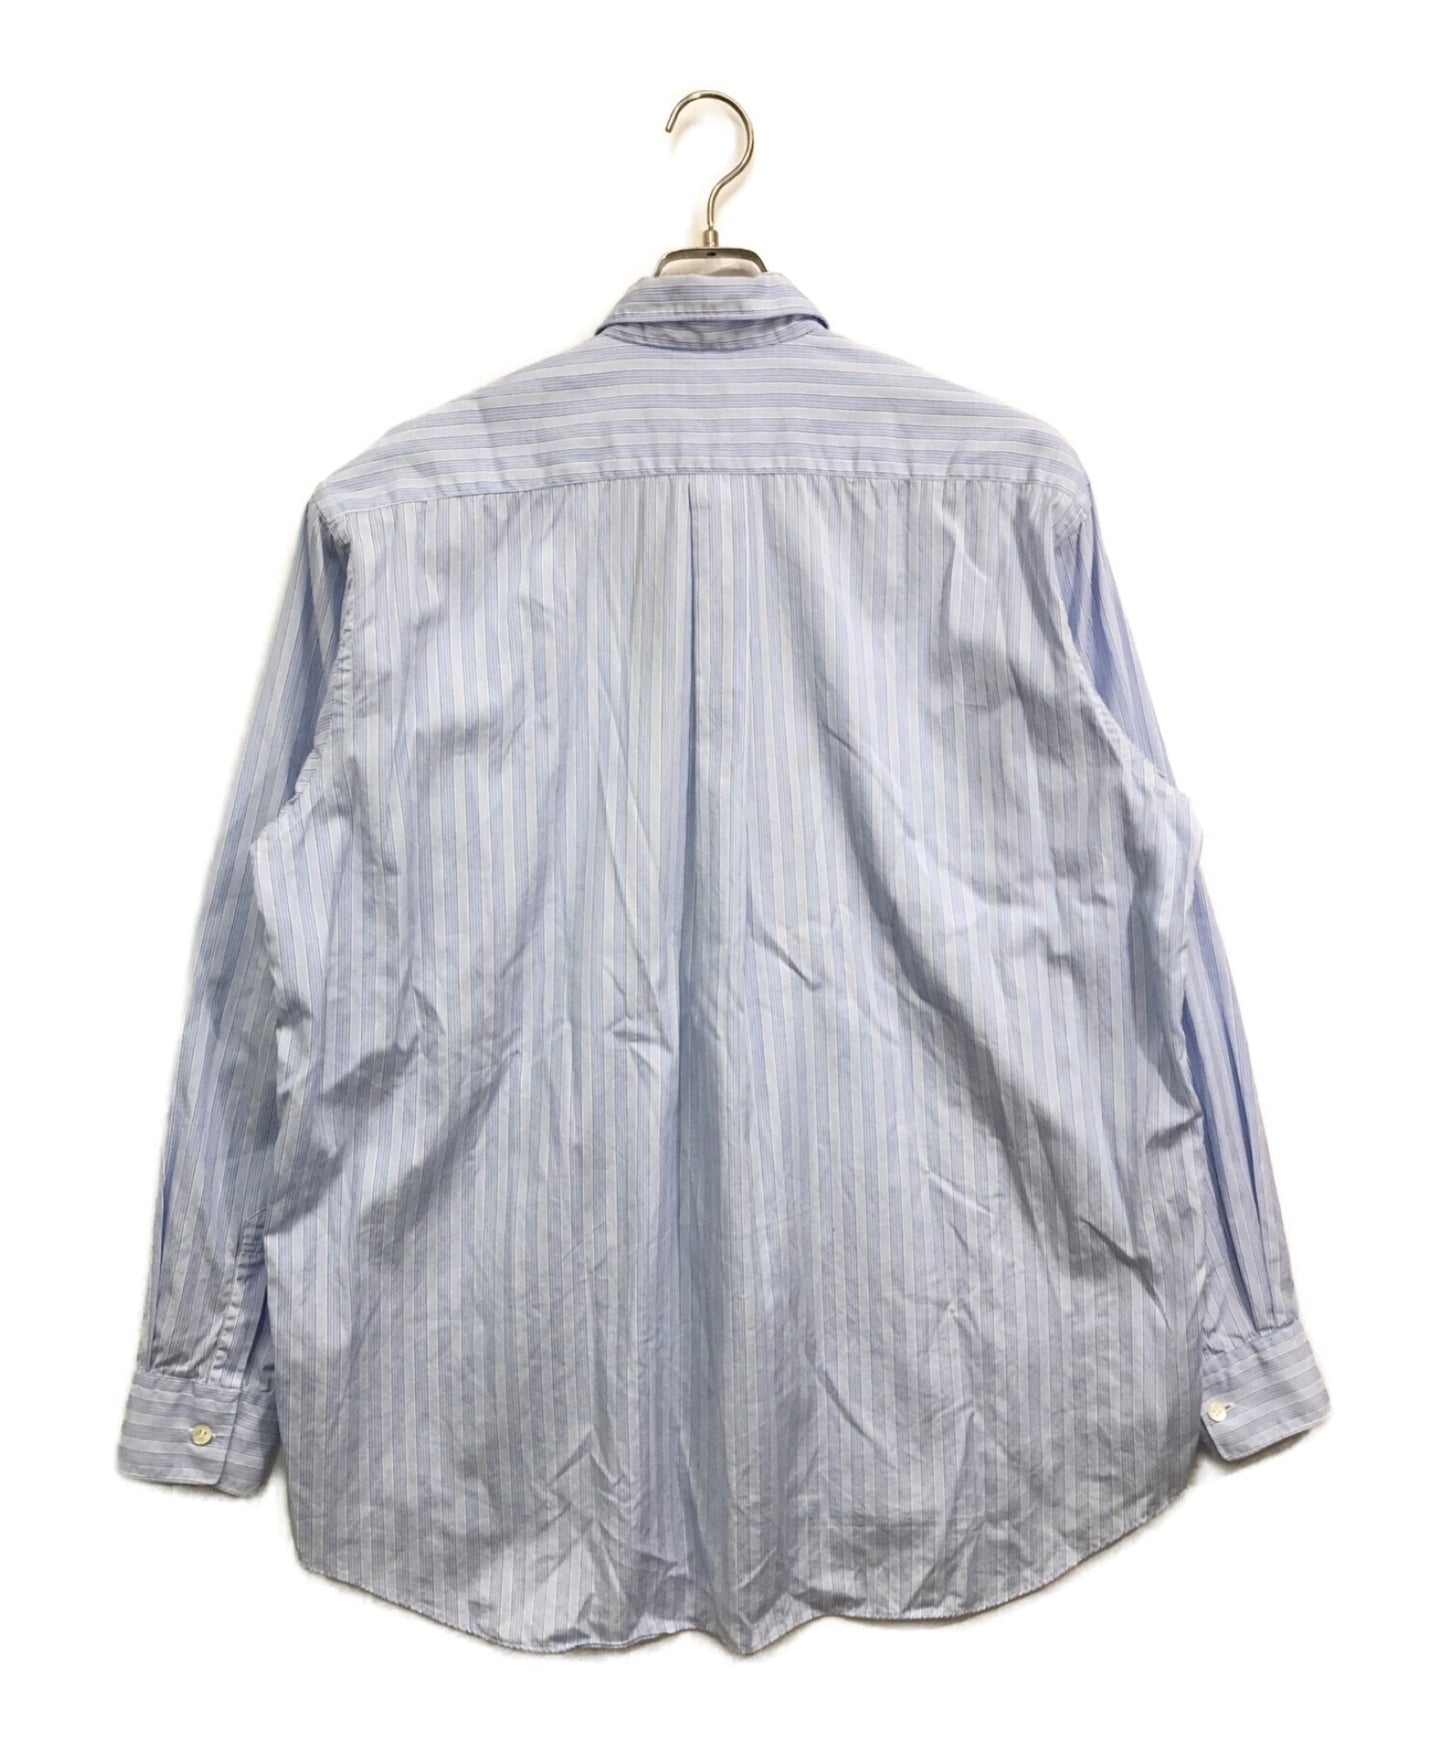 Comme des Garcons衬衫刺绣条纹衬衫 /长袖衬衫 /刺绣 / AD1994 FW-01019M